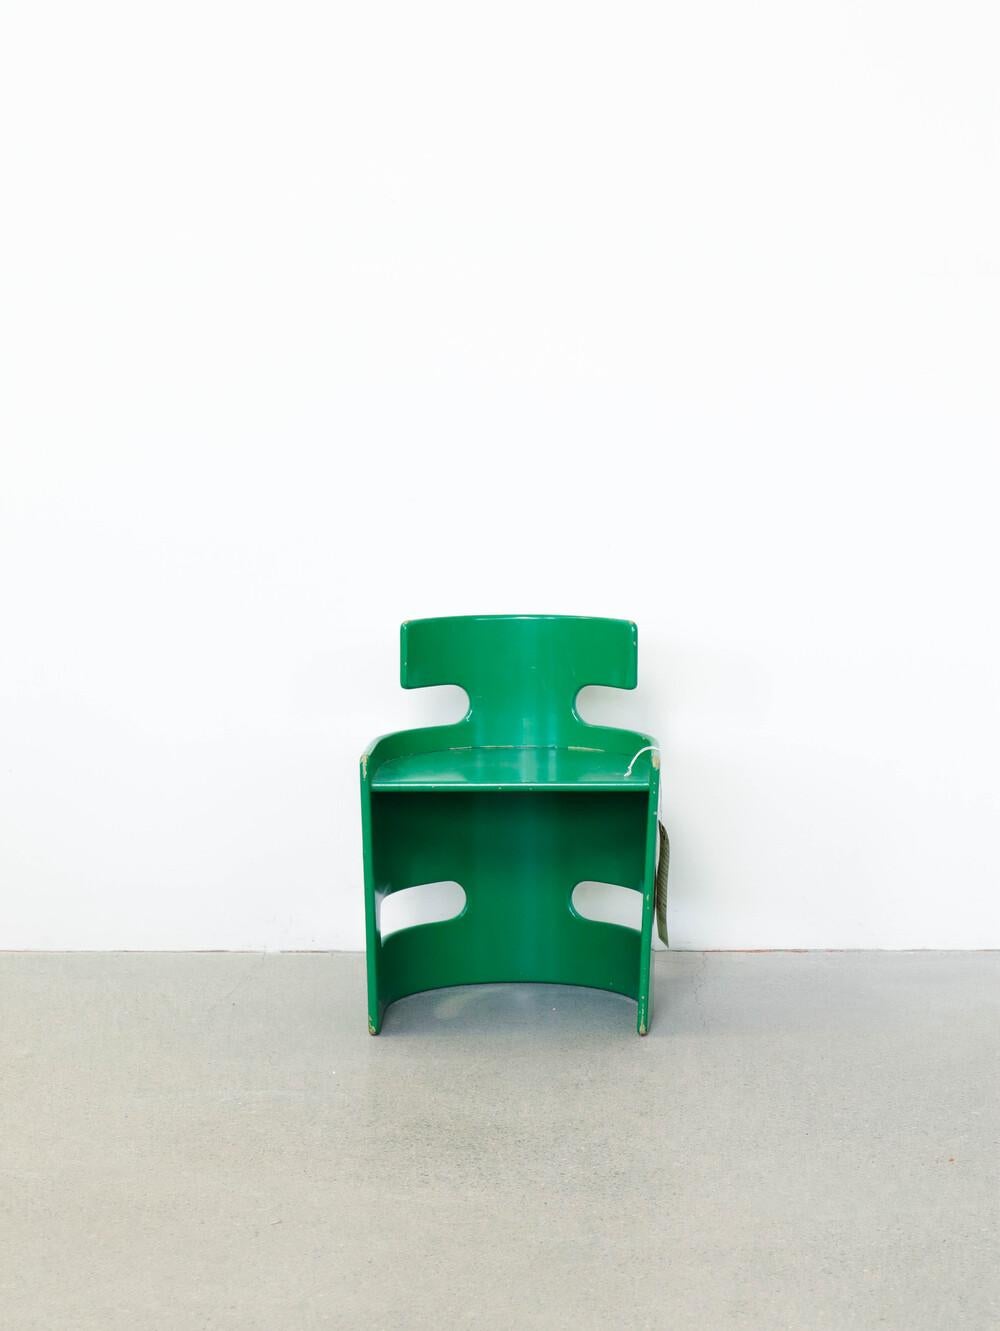 Schwedischer grüner Kinderstuhl im Vintage-Stil.